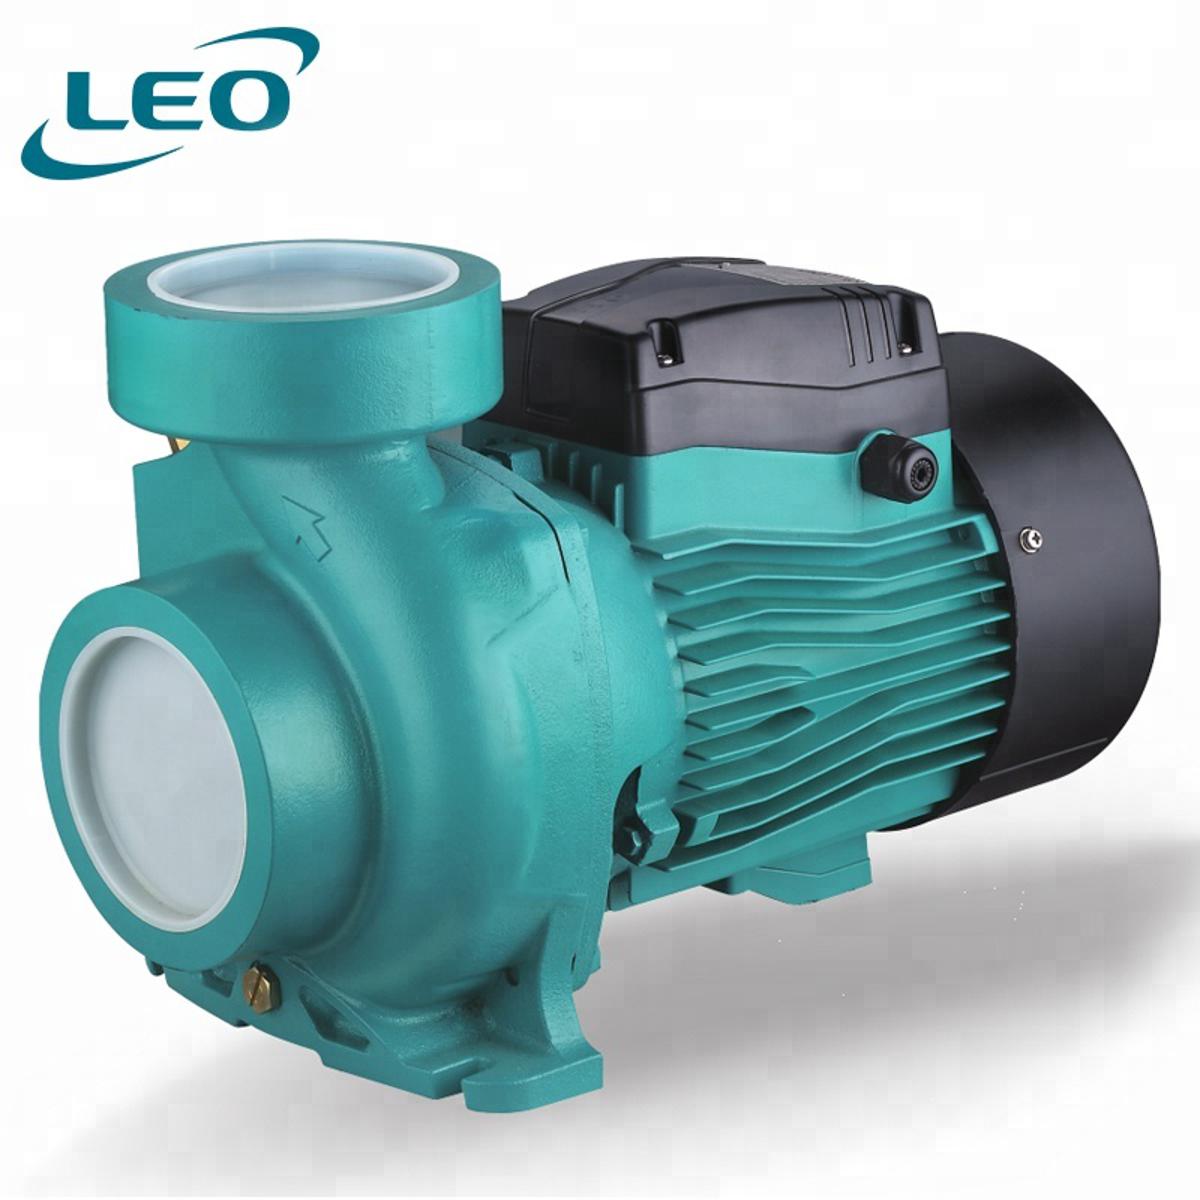 LEO - ACM-220B3 - 2200 W - 3 HP - Clean Water HIGH Flow Centrifugal Pump - 180V~220V SINGLE PHASE - SIZE :- 3" x 3" - European STANDARD